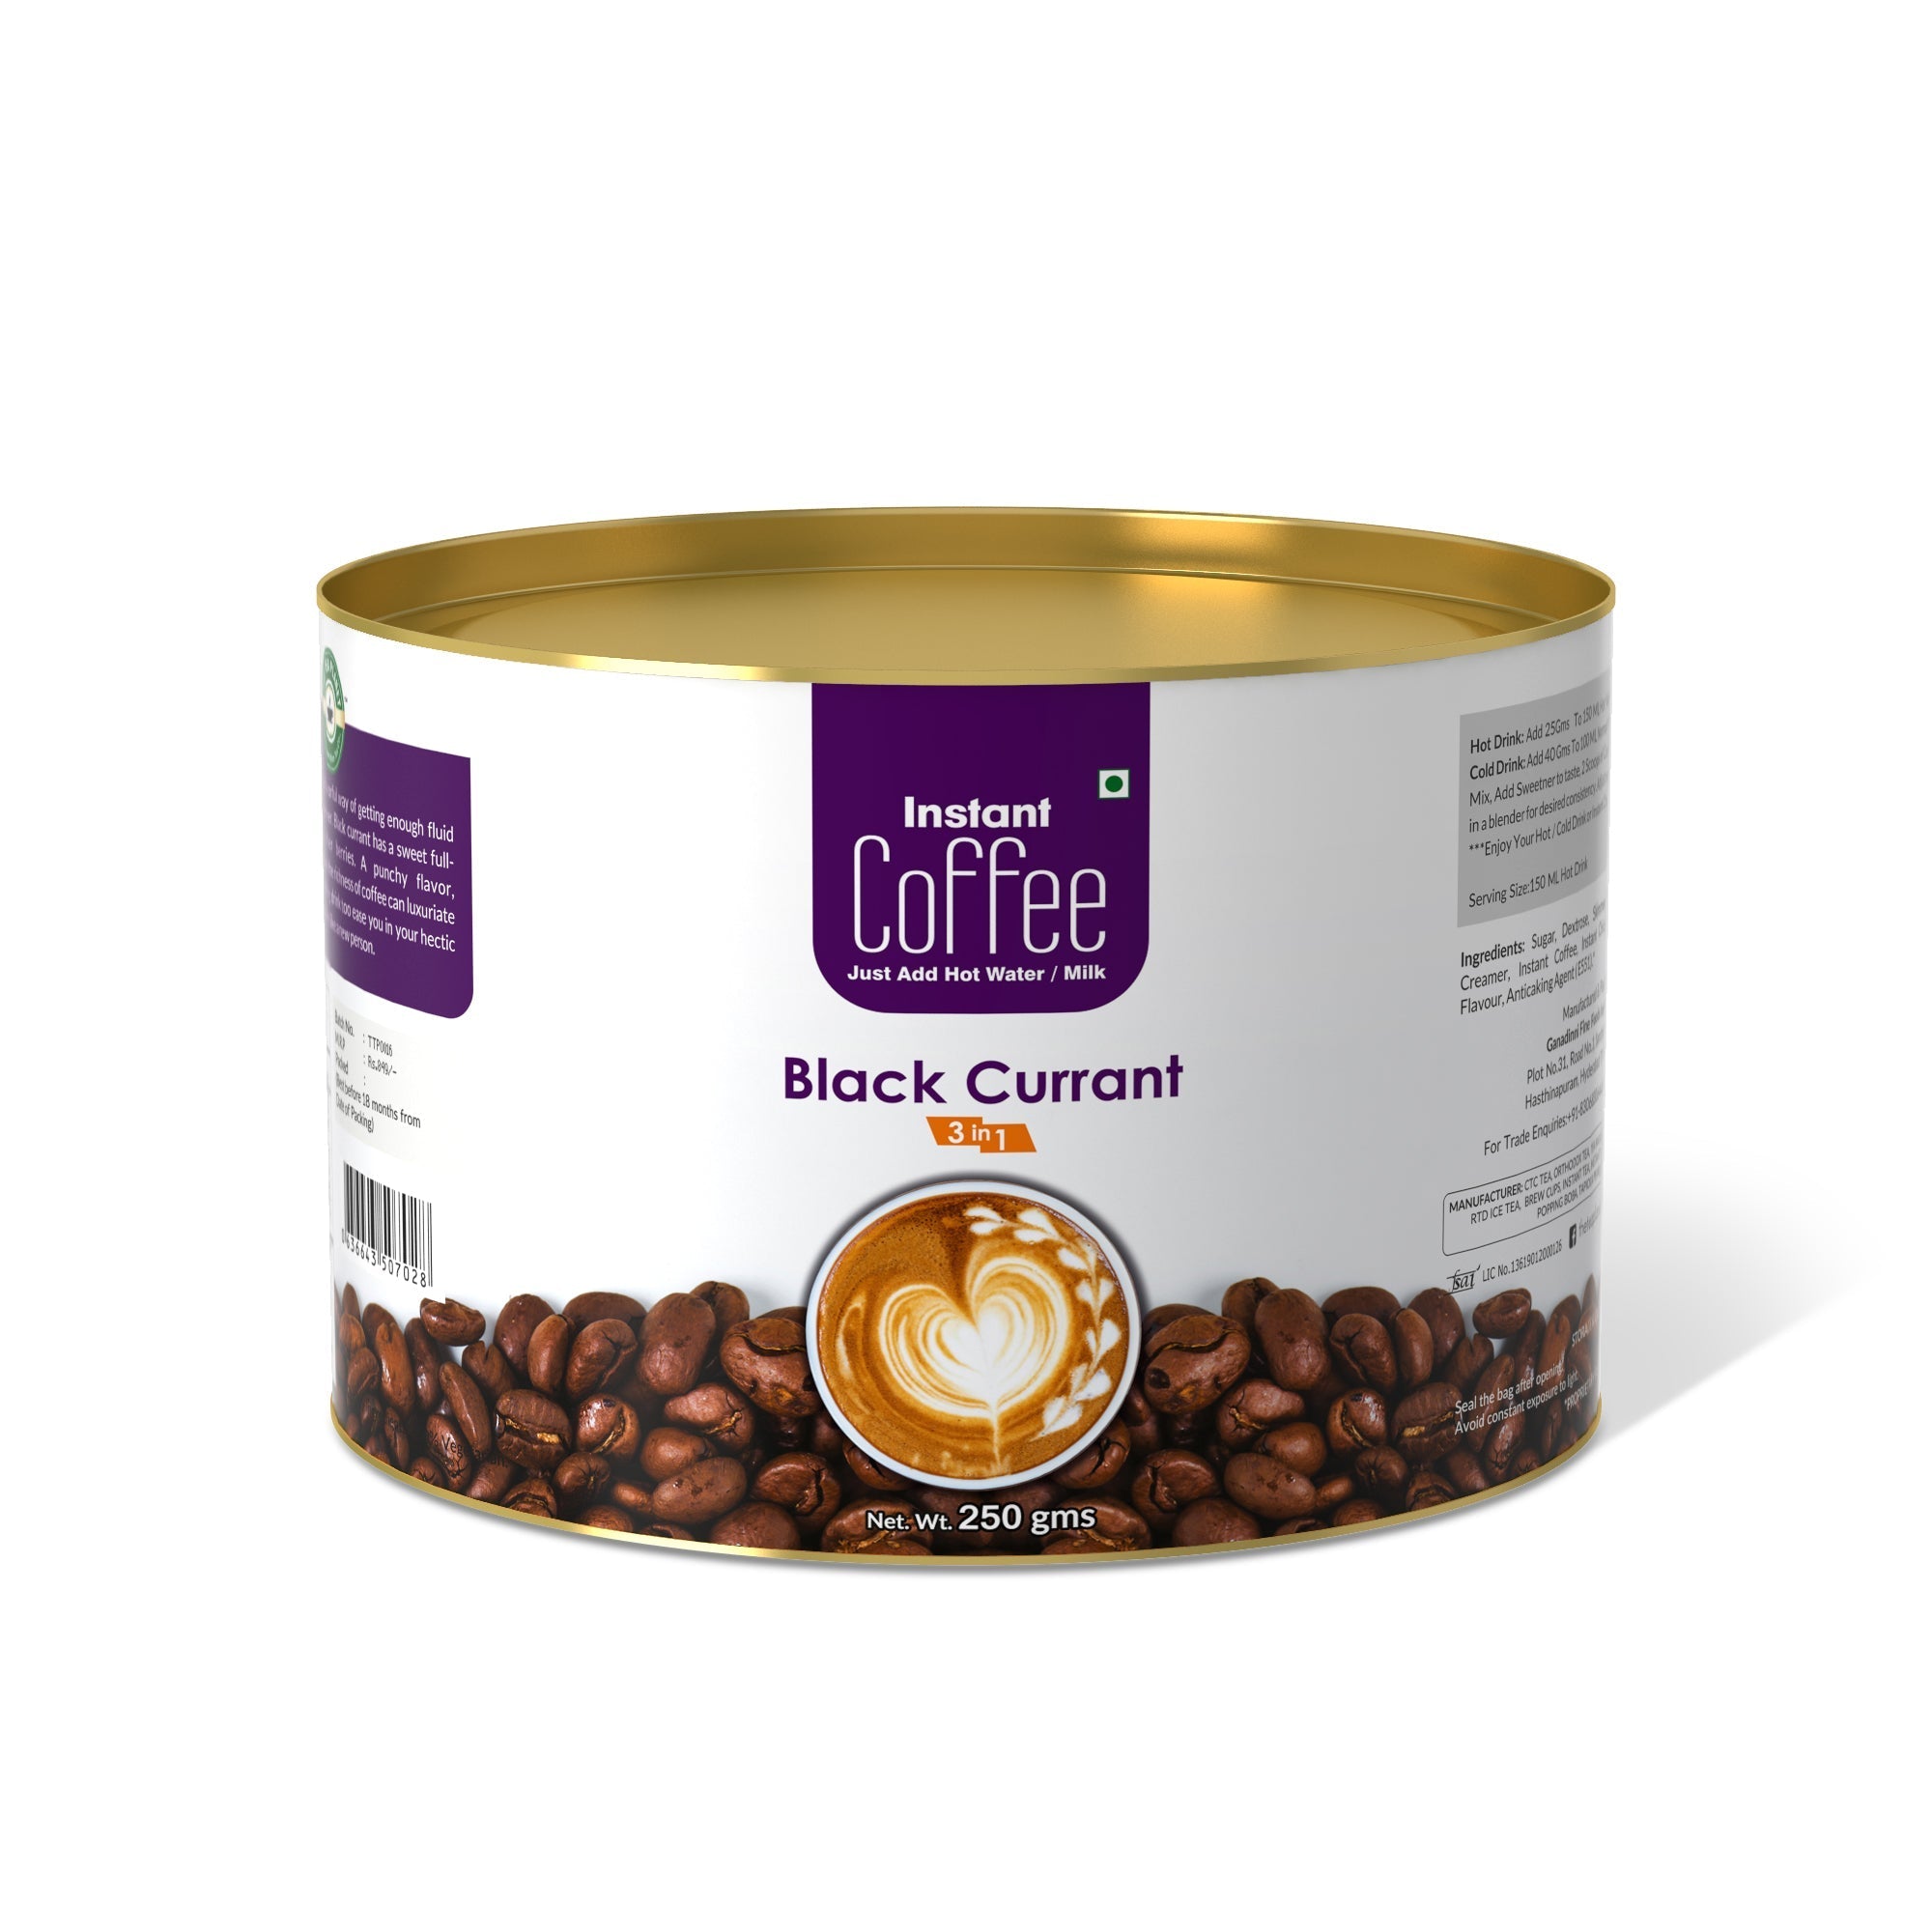 Black Currant Instant Coffee Premix (3 in 1) - 800 gms